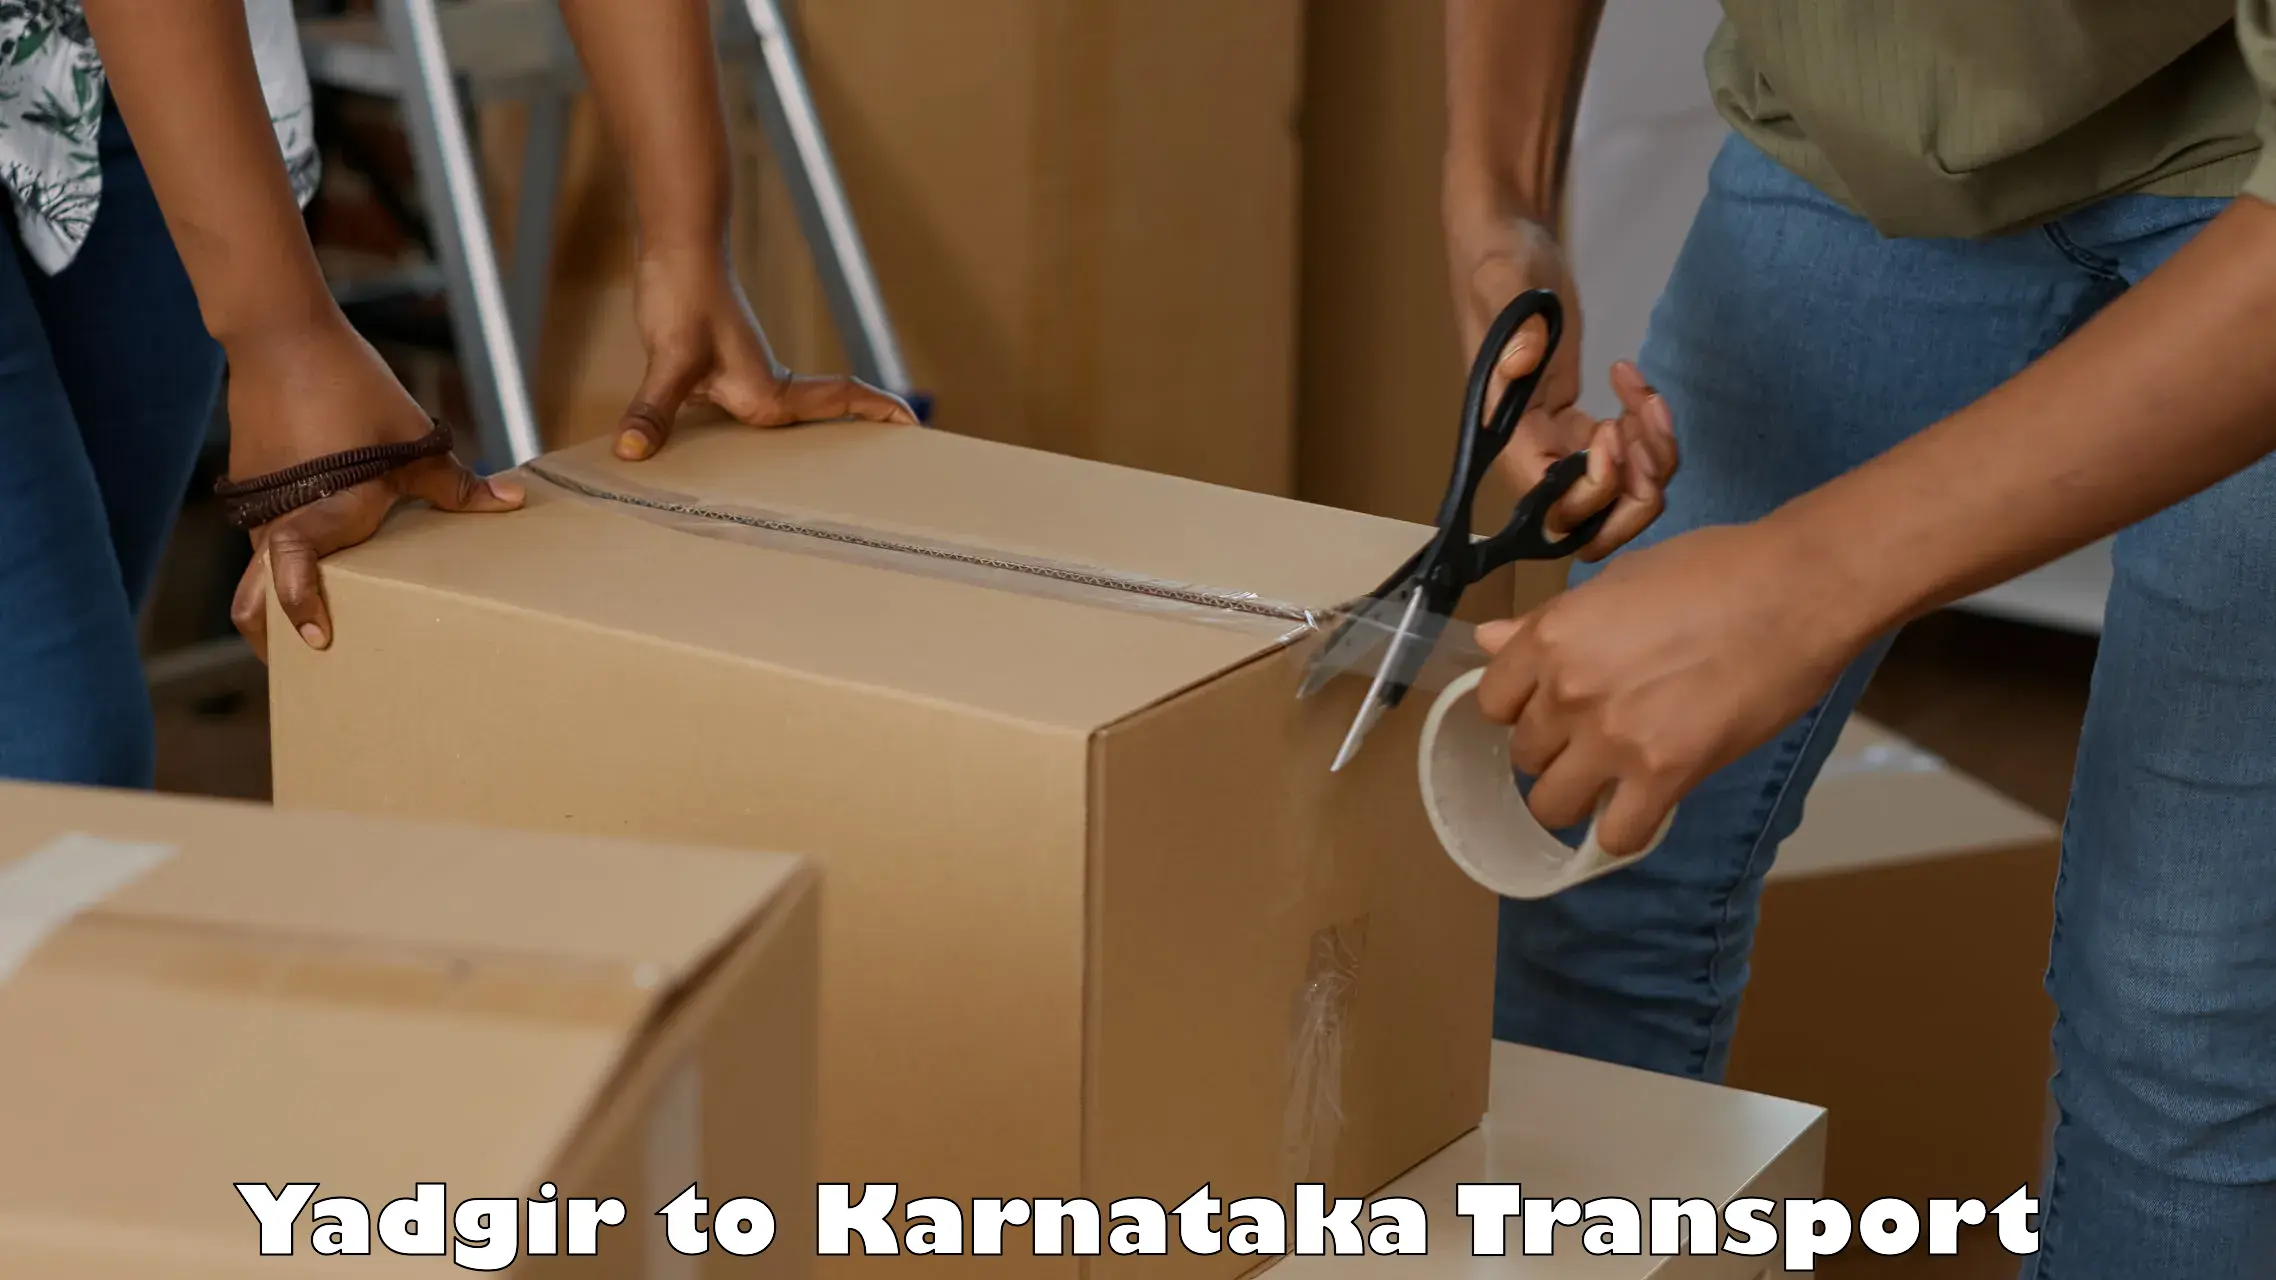 Commercial transport service Yadgir to Karnataka